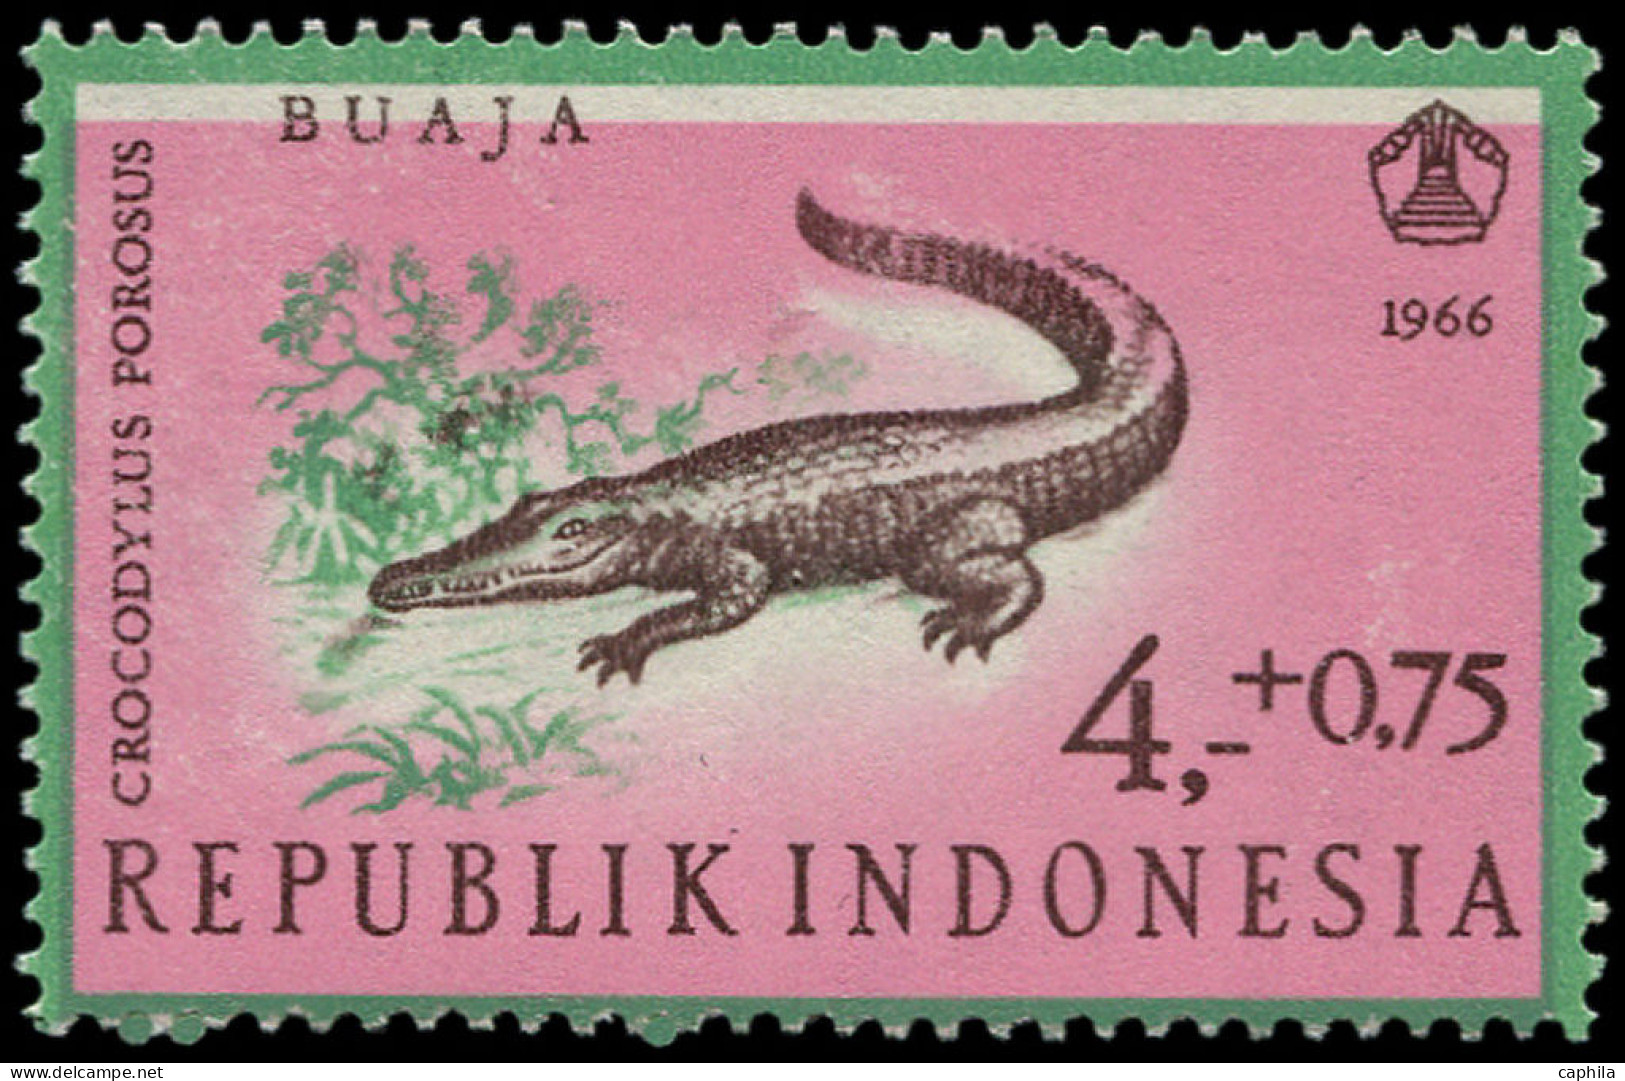 ** INDONESIE - Poste - 496, Non émis Fond Rose Au Lieu De Brun: 4+ 0,75 Crocodile - Indonésie